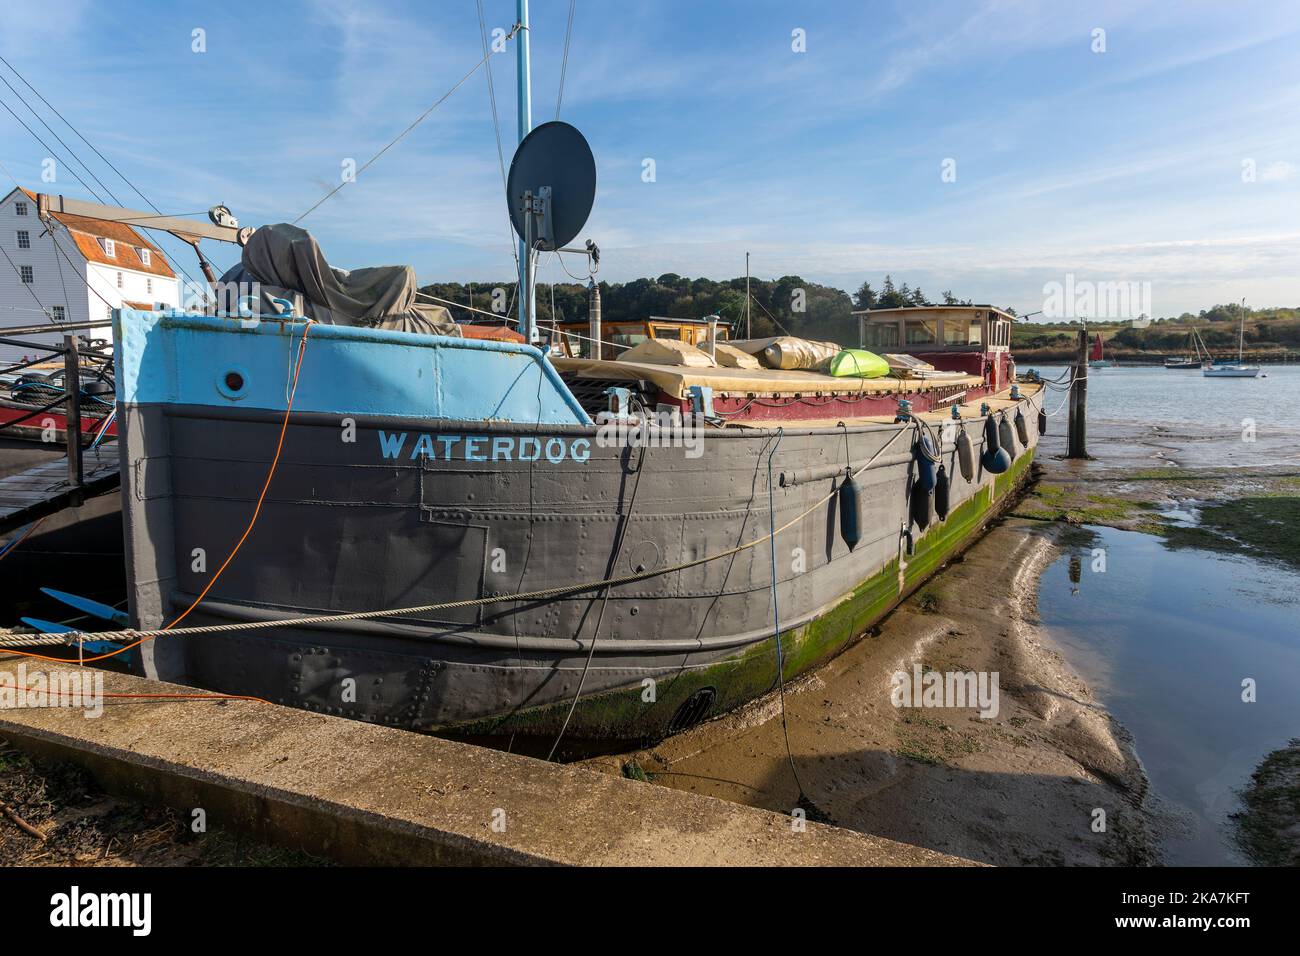 Humber barge 'Waterdog' originally 'Flyboat81' built 1876, Woodbridge, Suffolk, England, UK Stock Photo